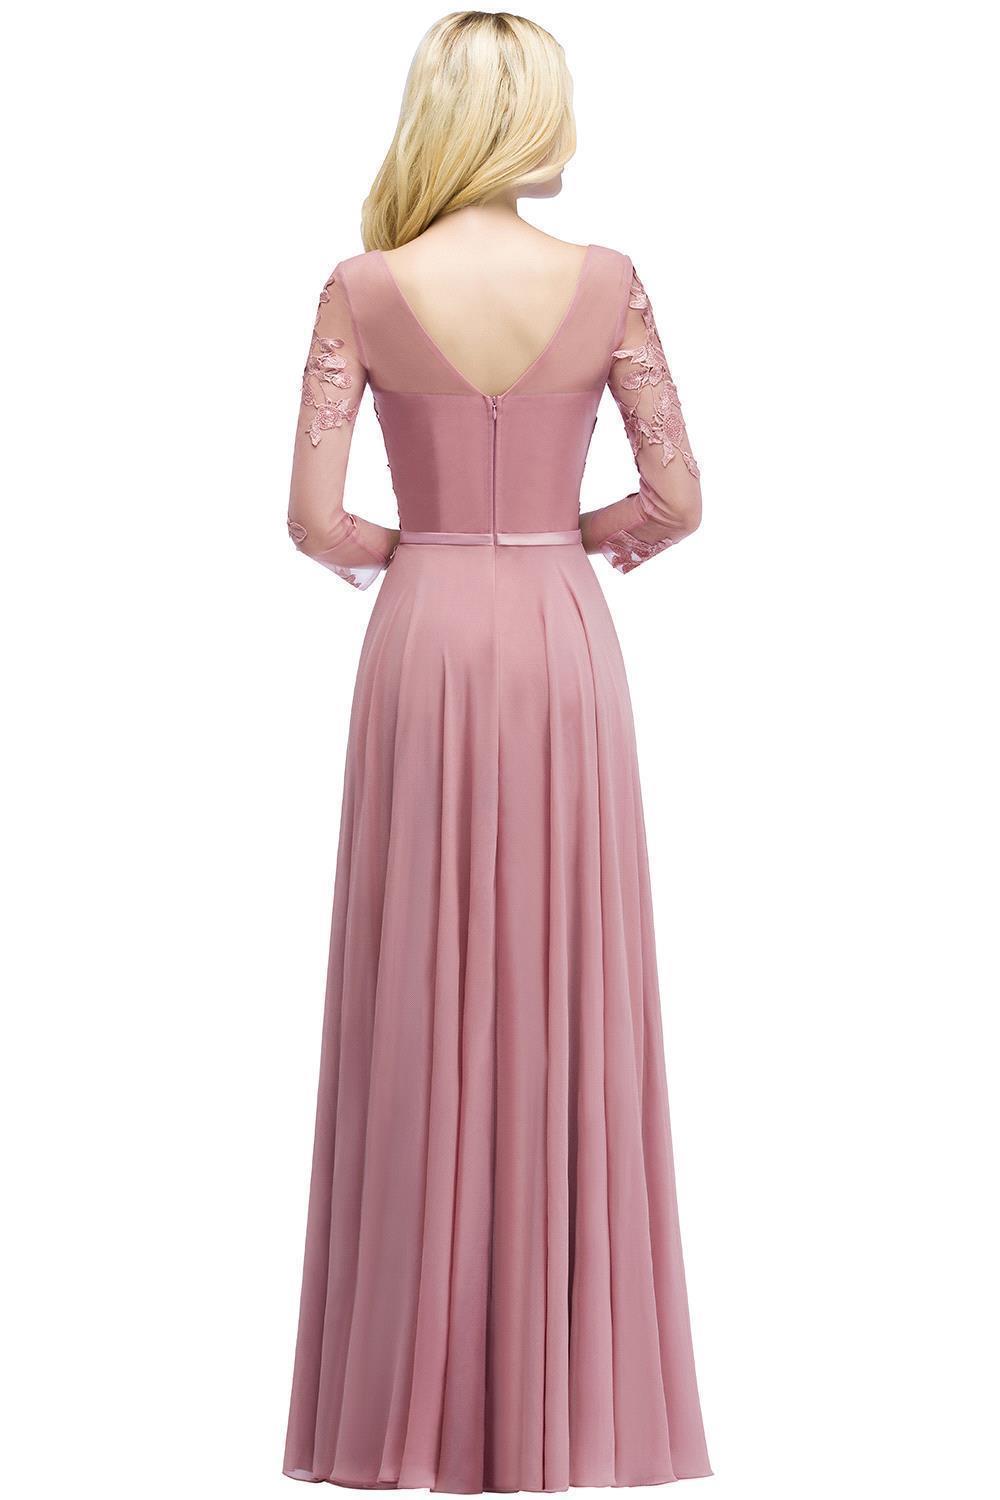 Elegant Chiffon Lace Dusty Rose Evening Dress in Stock